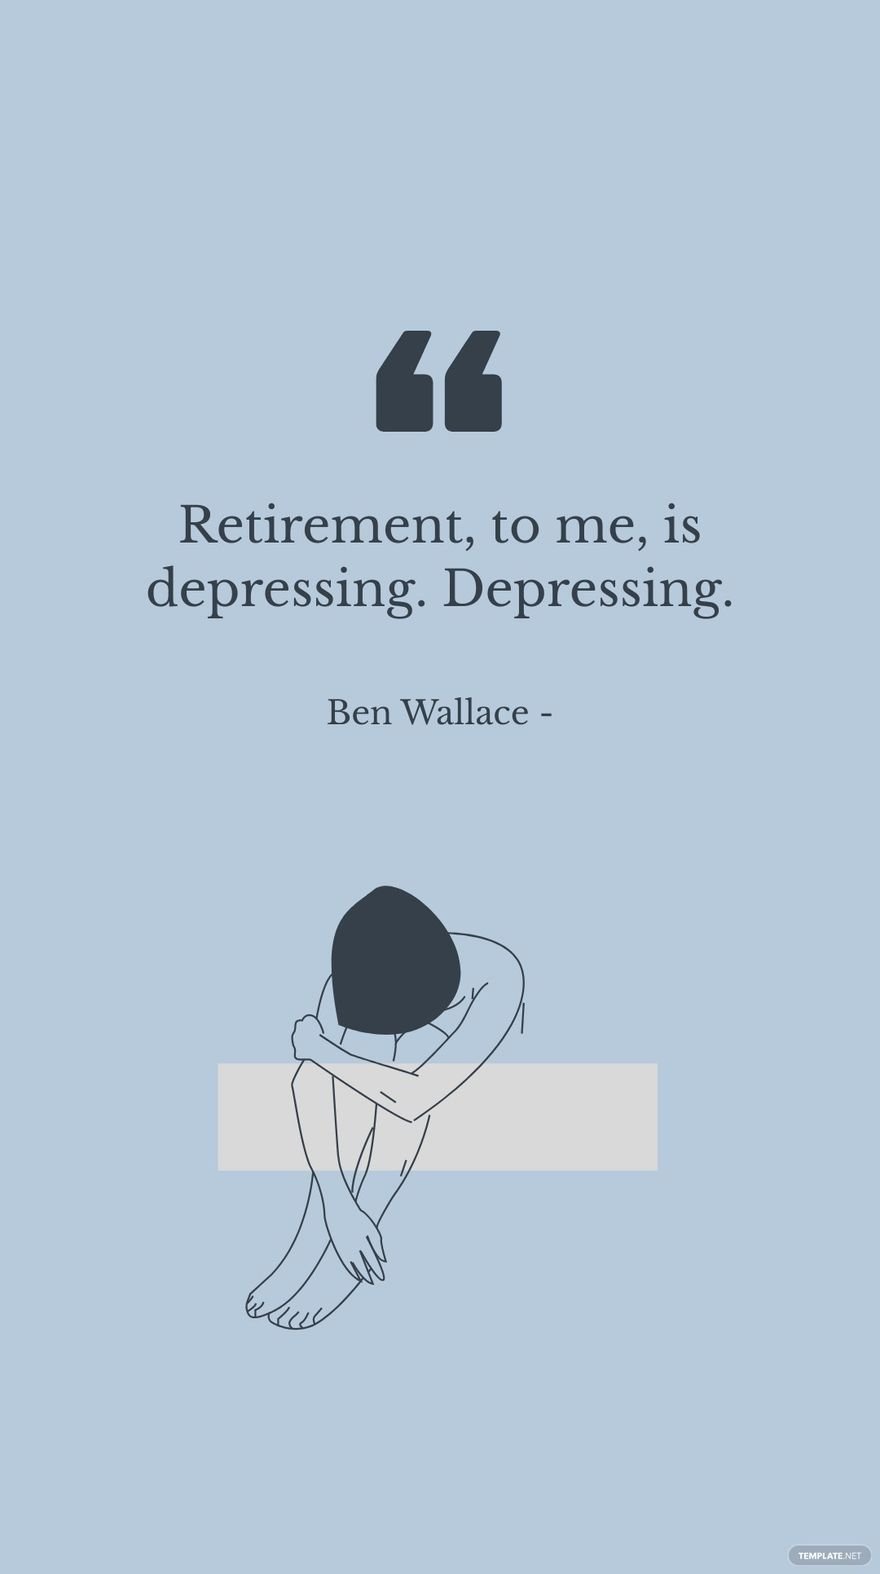 Free Ben Wallace - Retirement, to me, is depressing. Depressing. in JPG